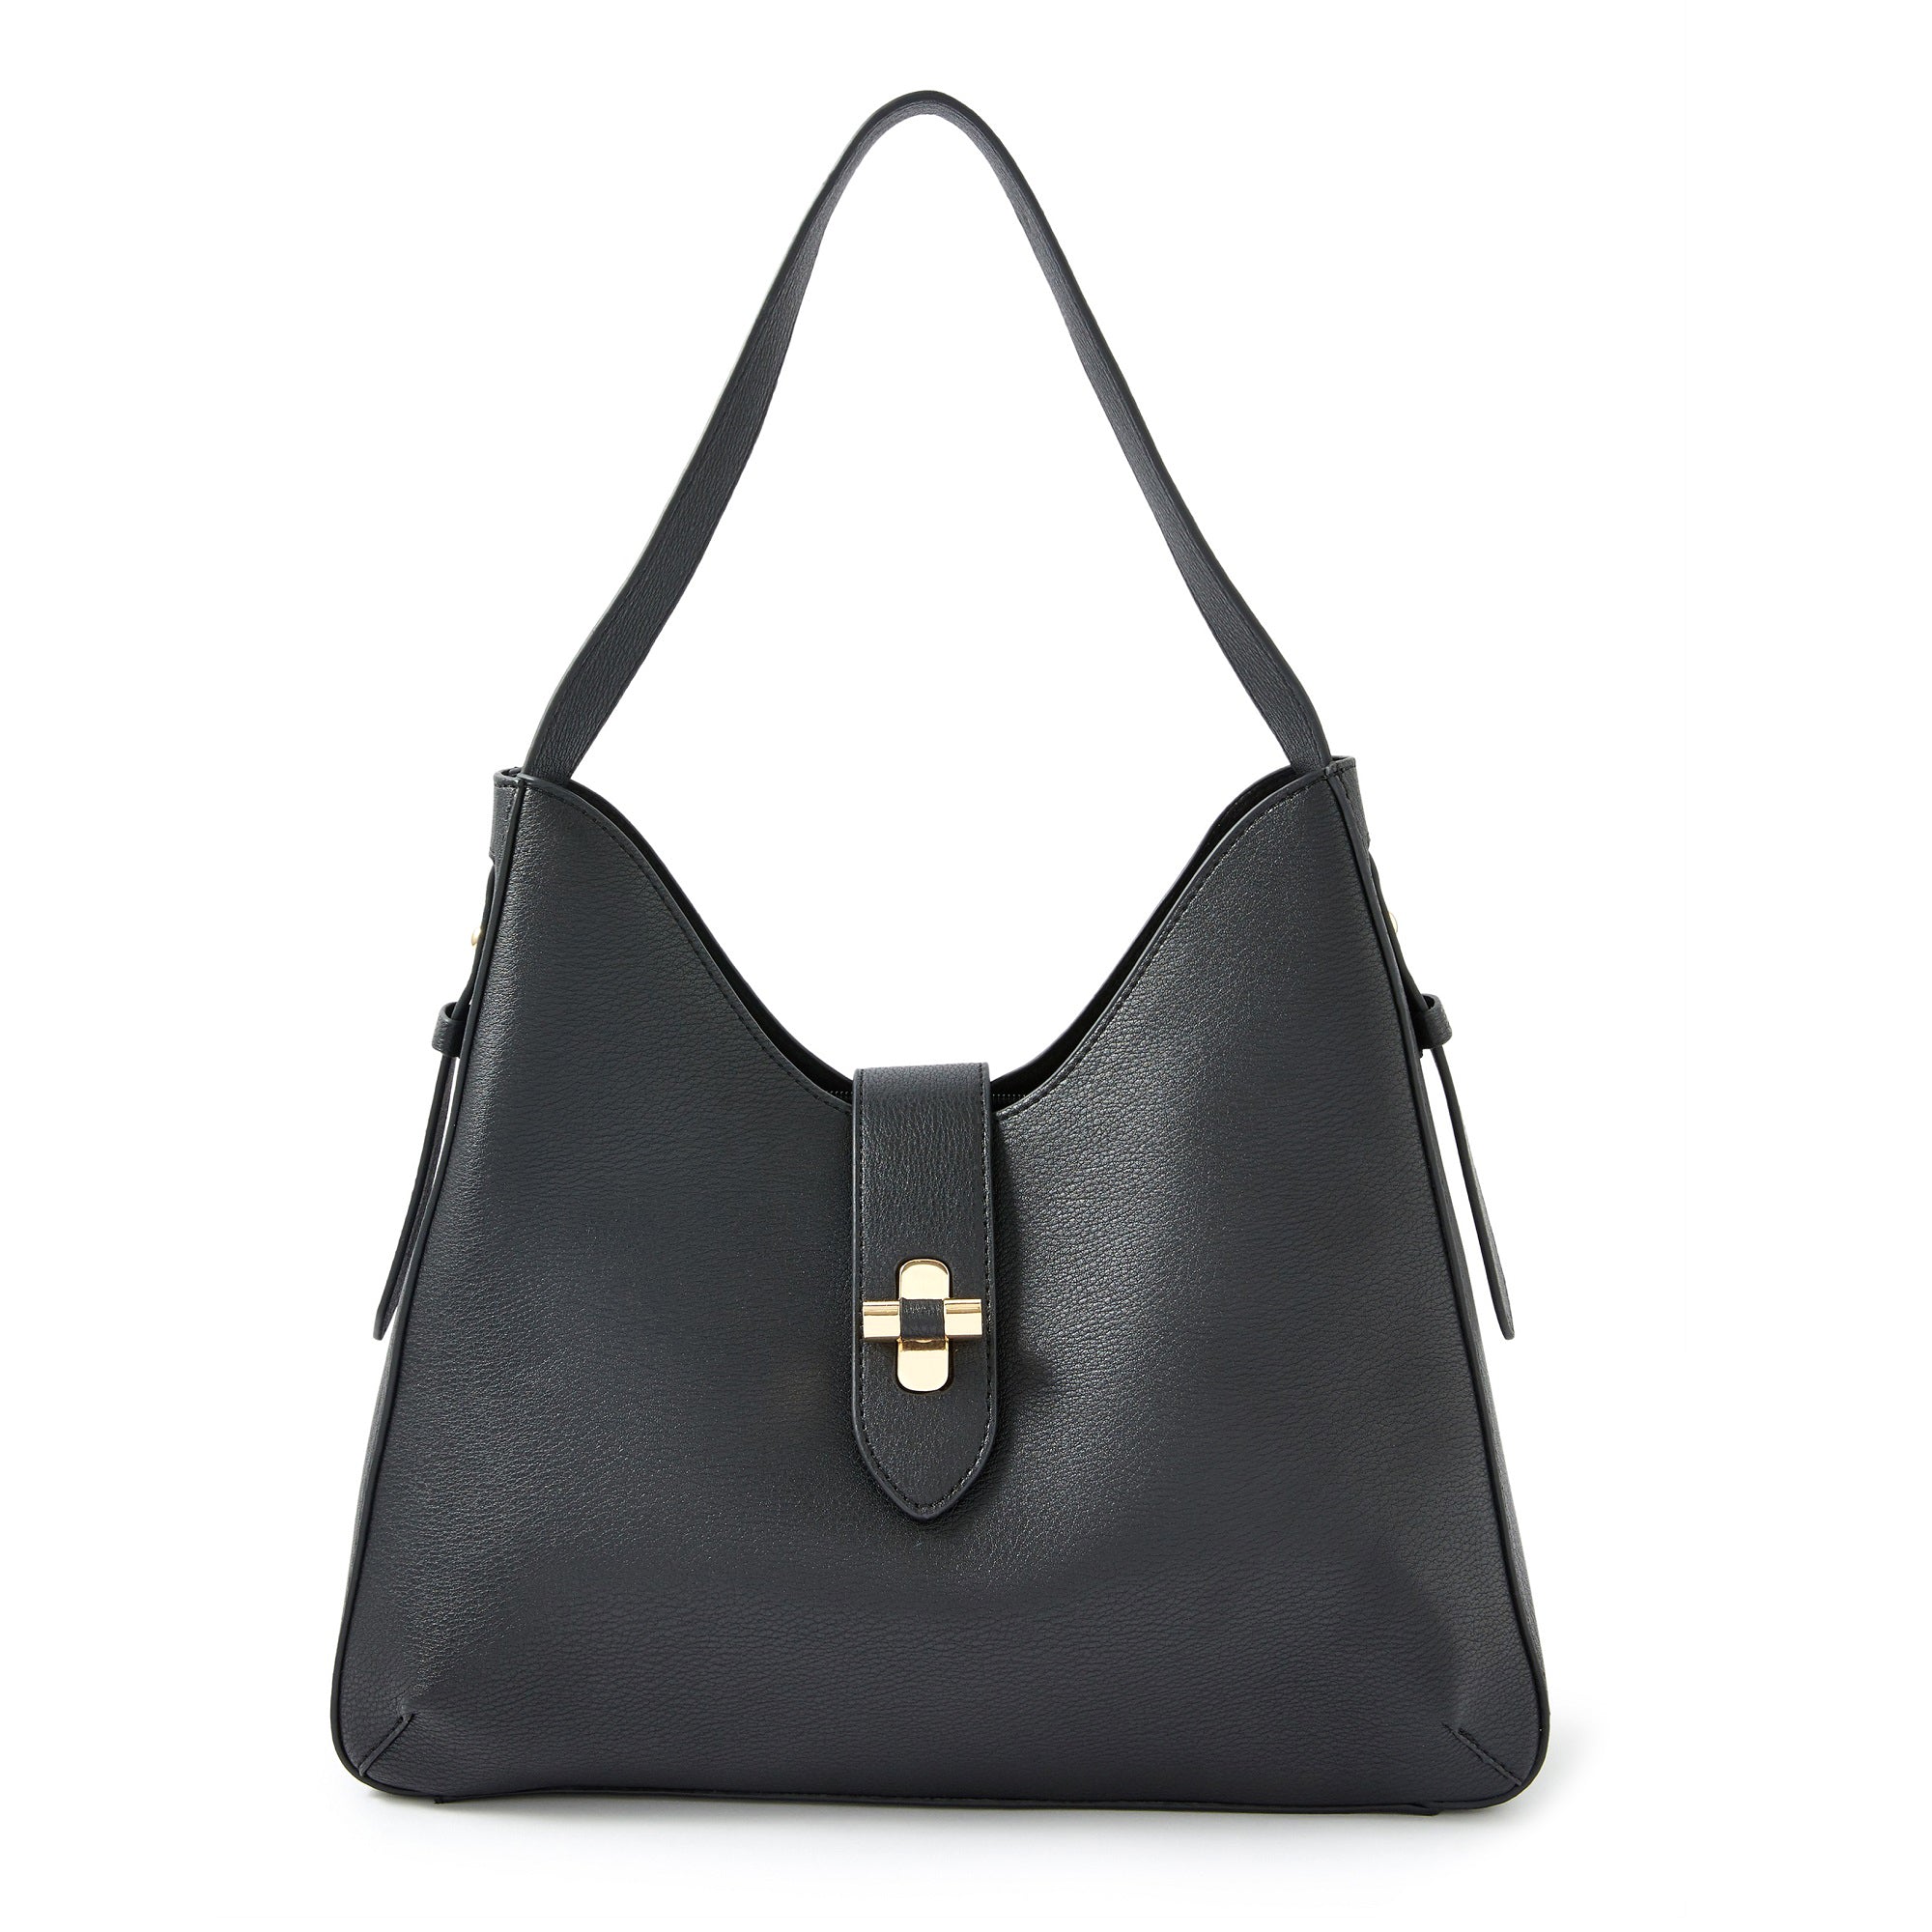 Accessorize London women's black Talia Large Twistlock bag